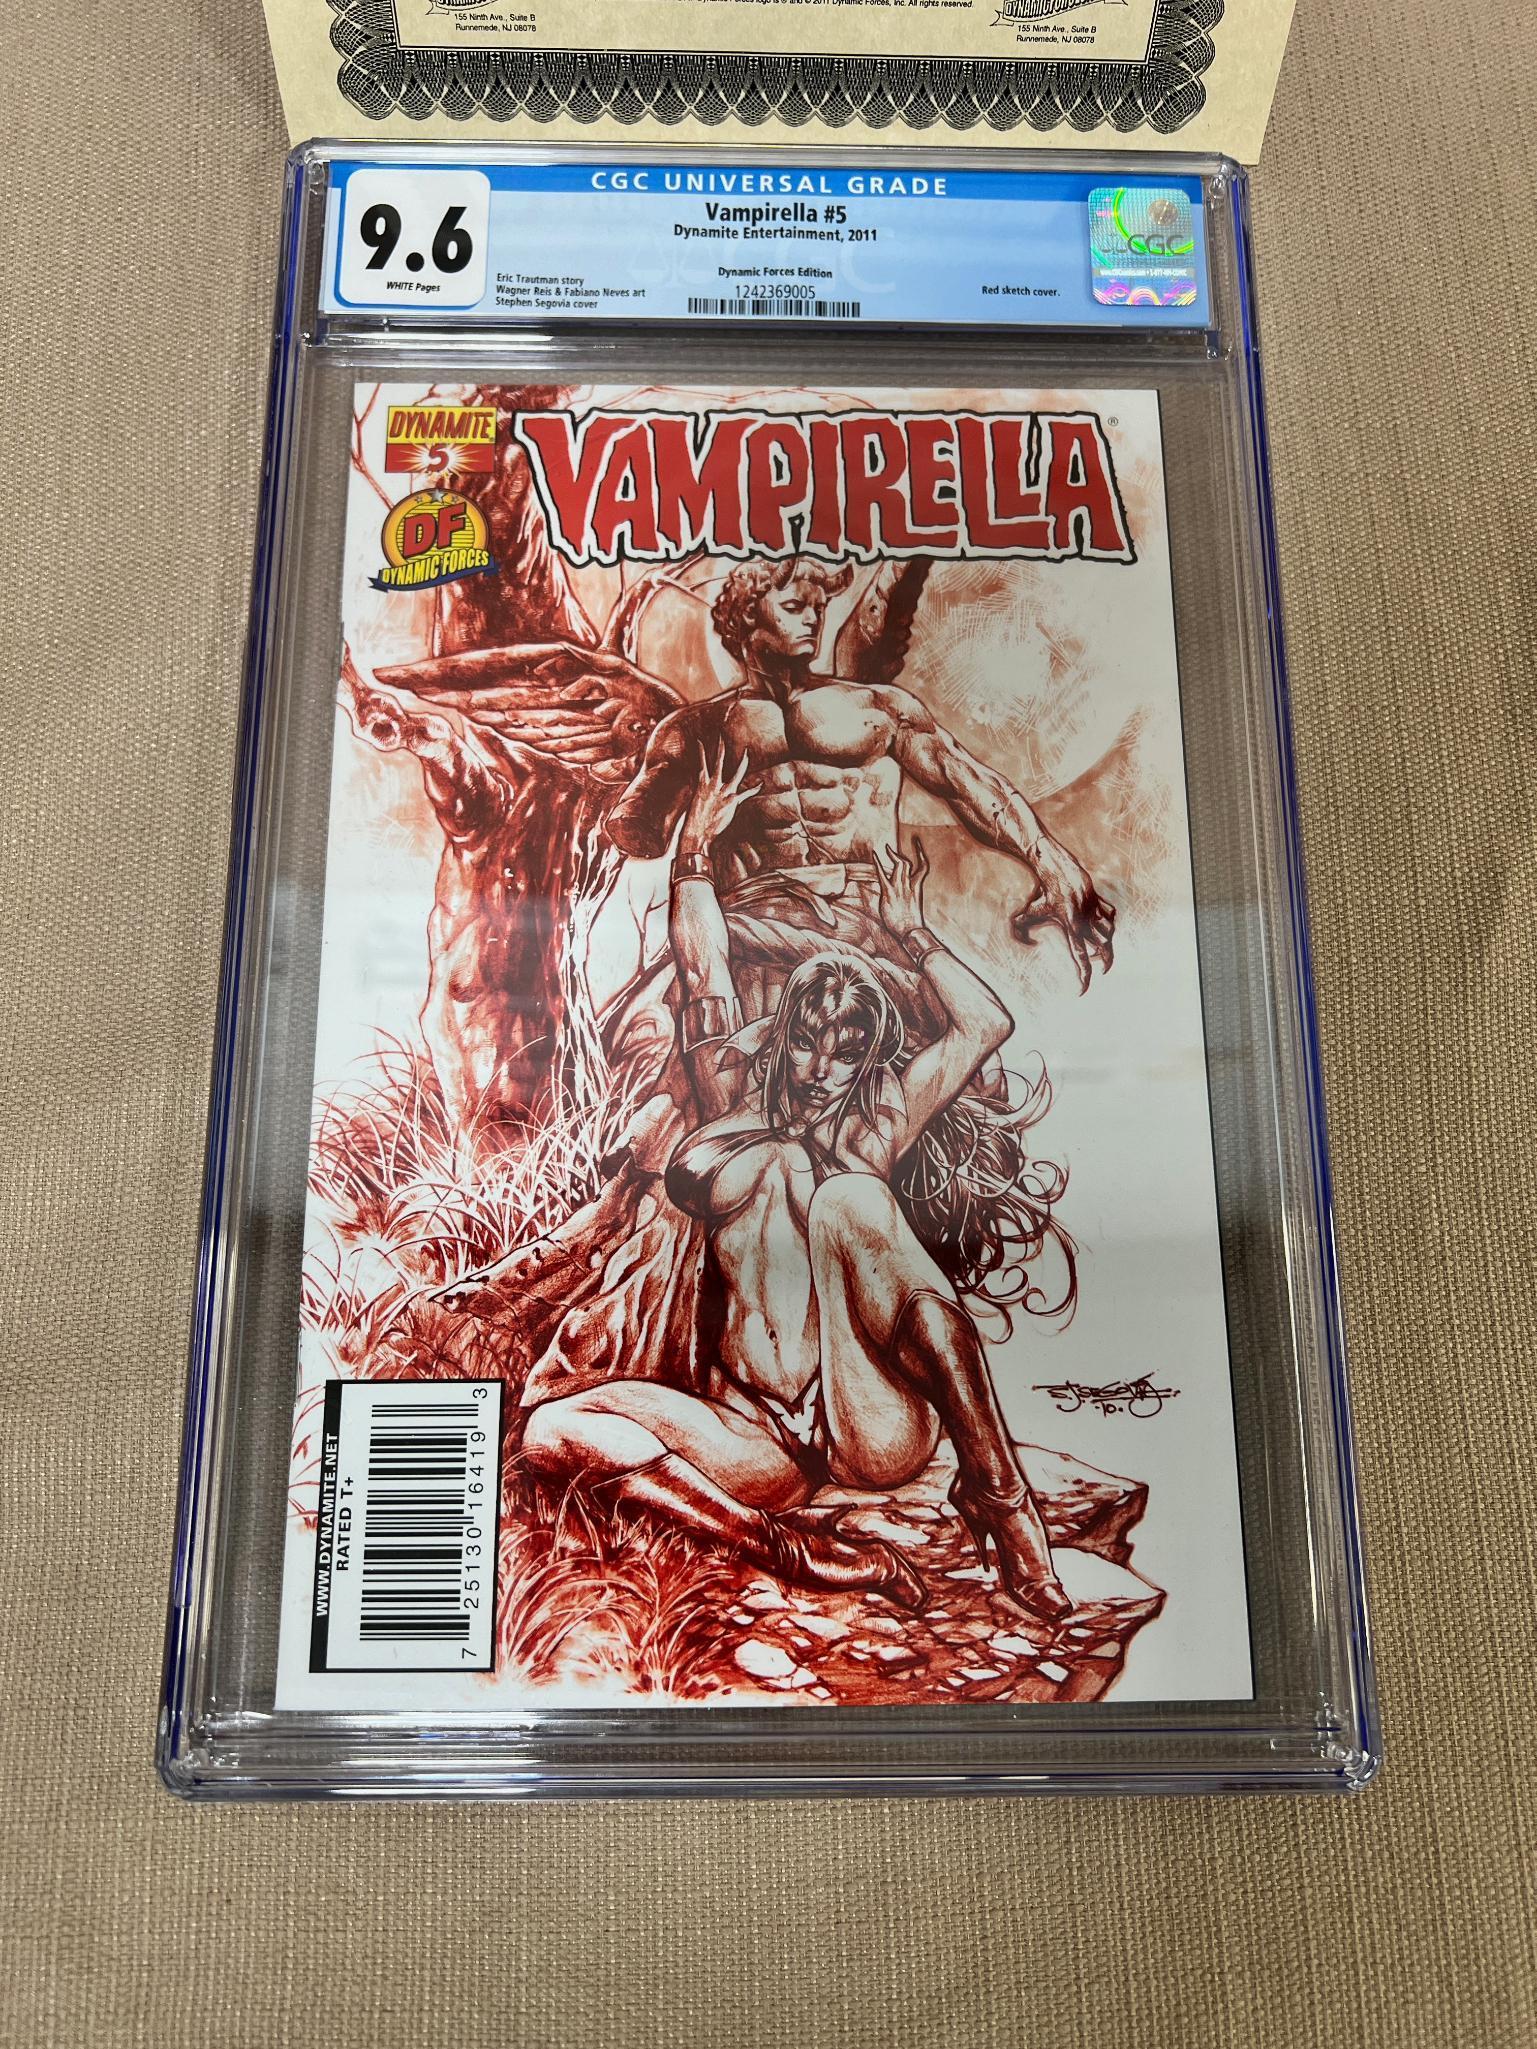 Vampirella No. 5 Comic Book in 9.6 CGC Holder